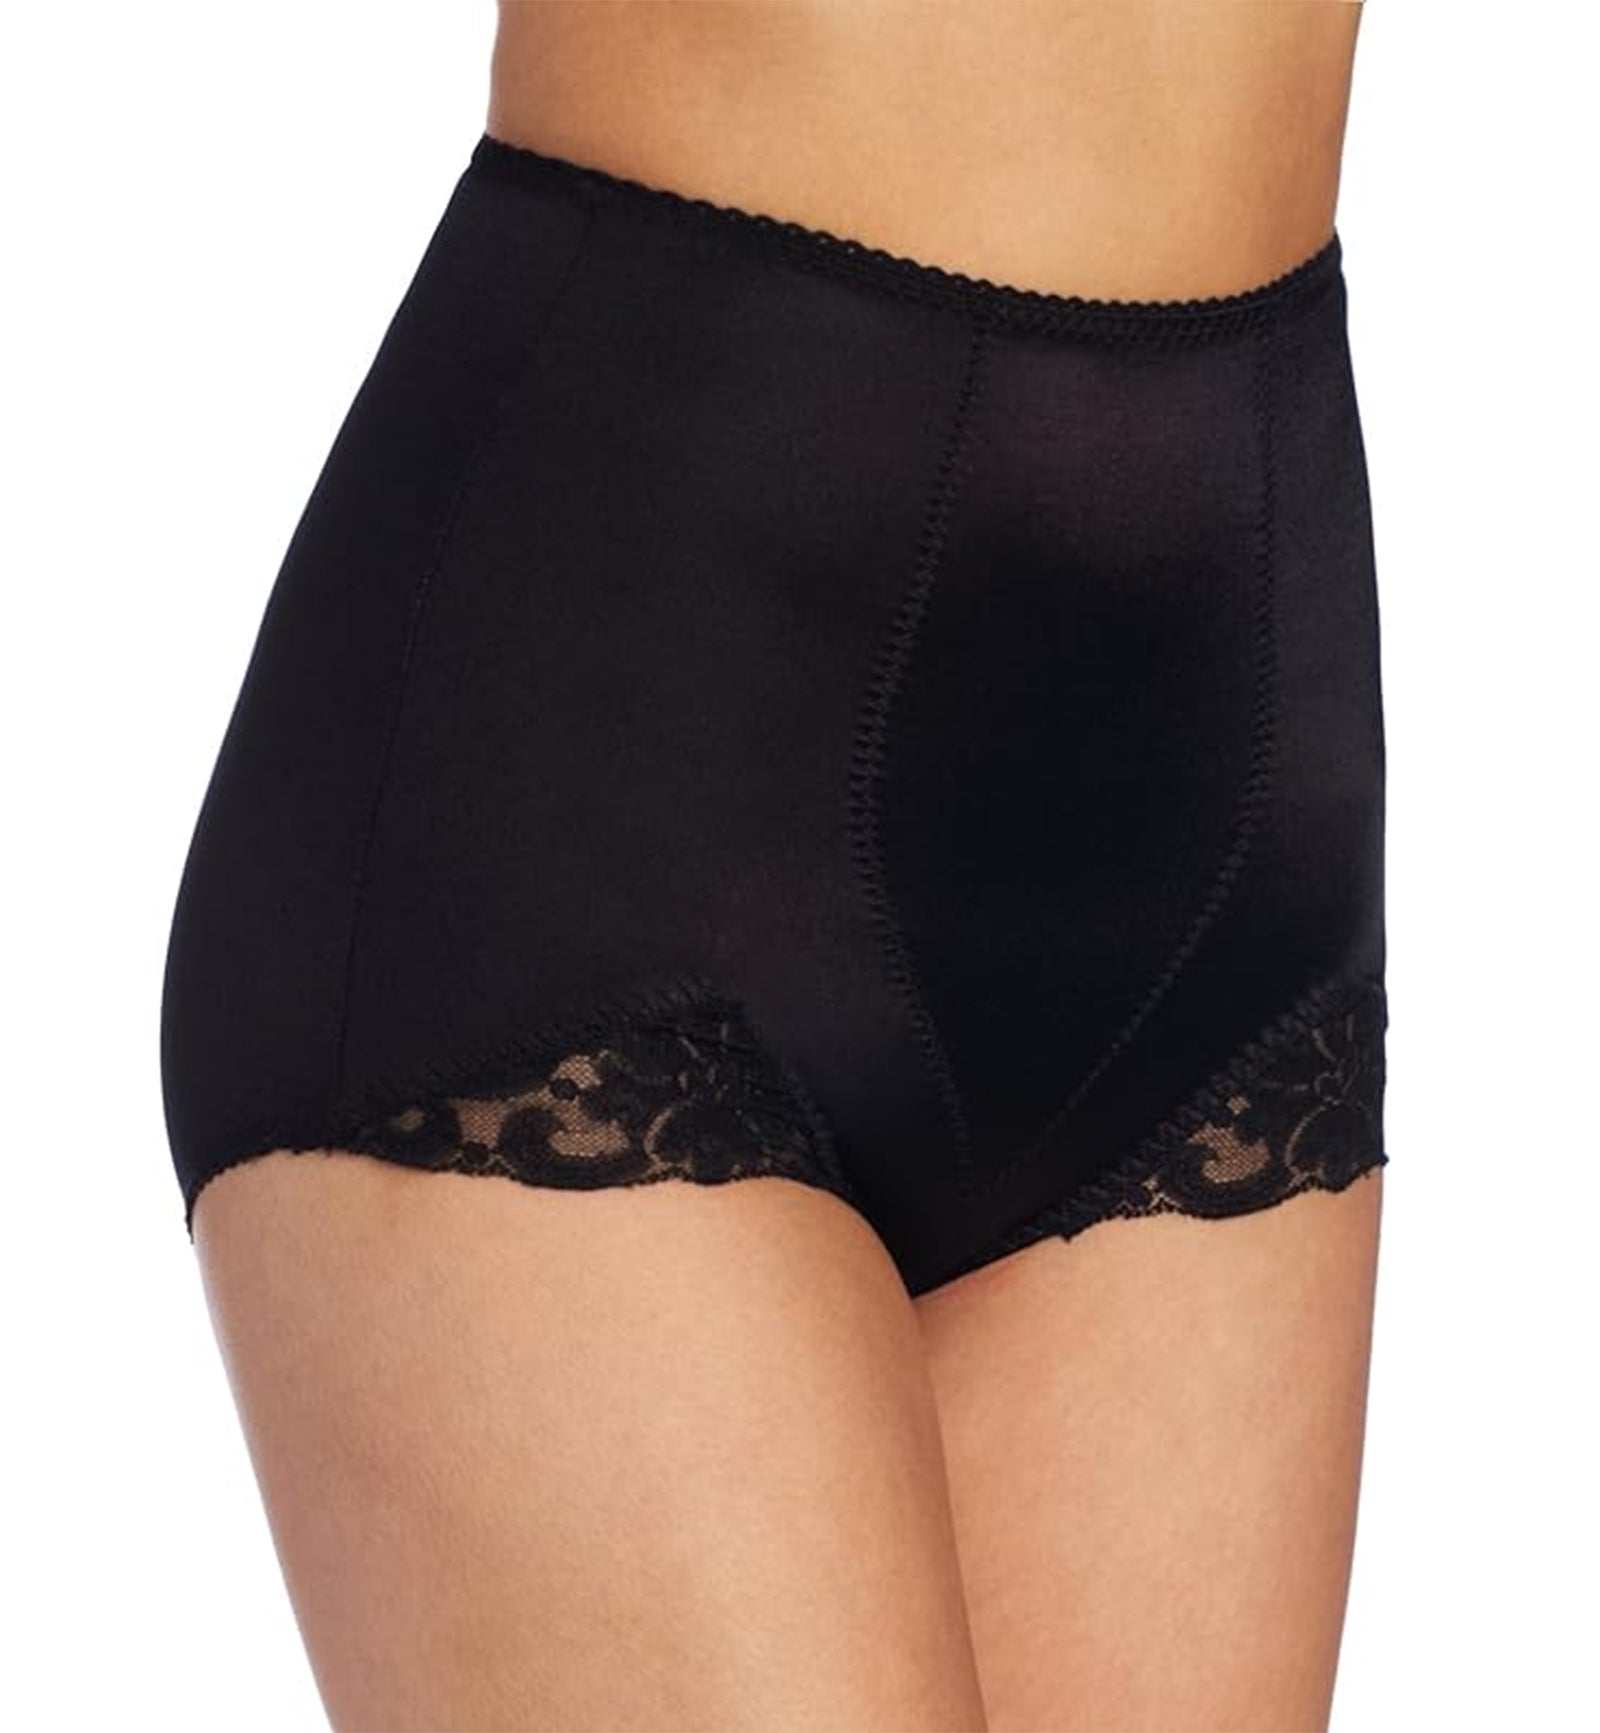 Rago Women's Plus-Size Control Panty Brief